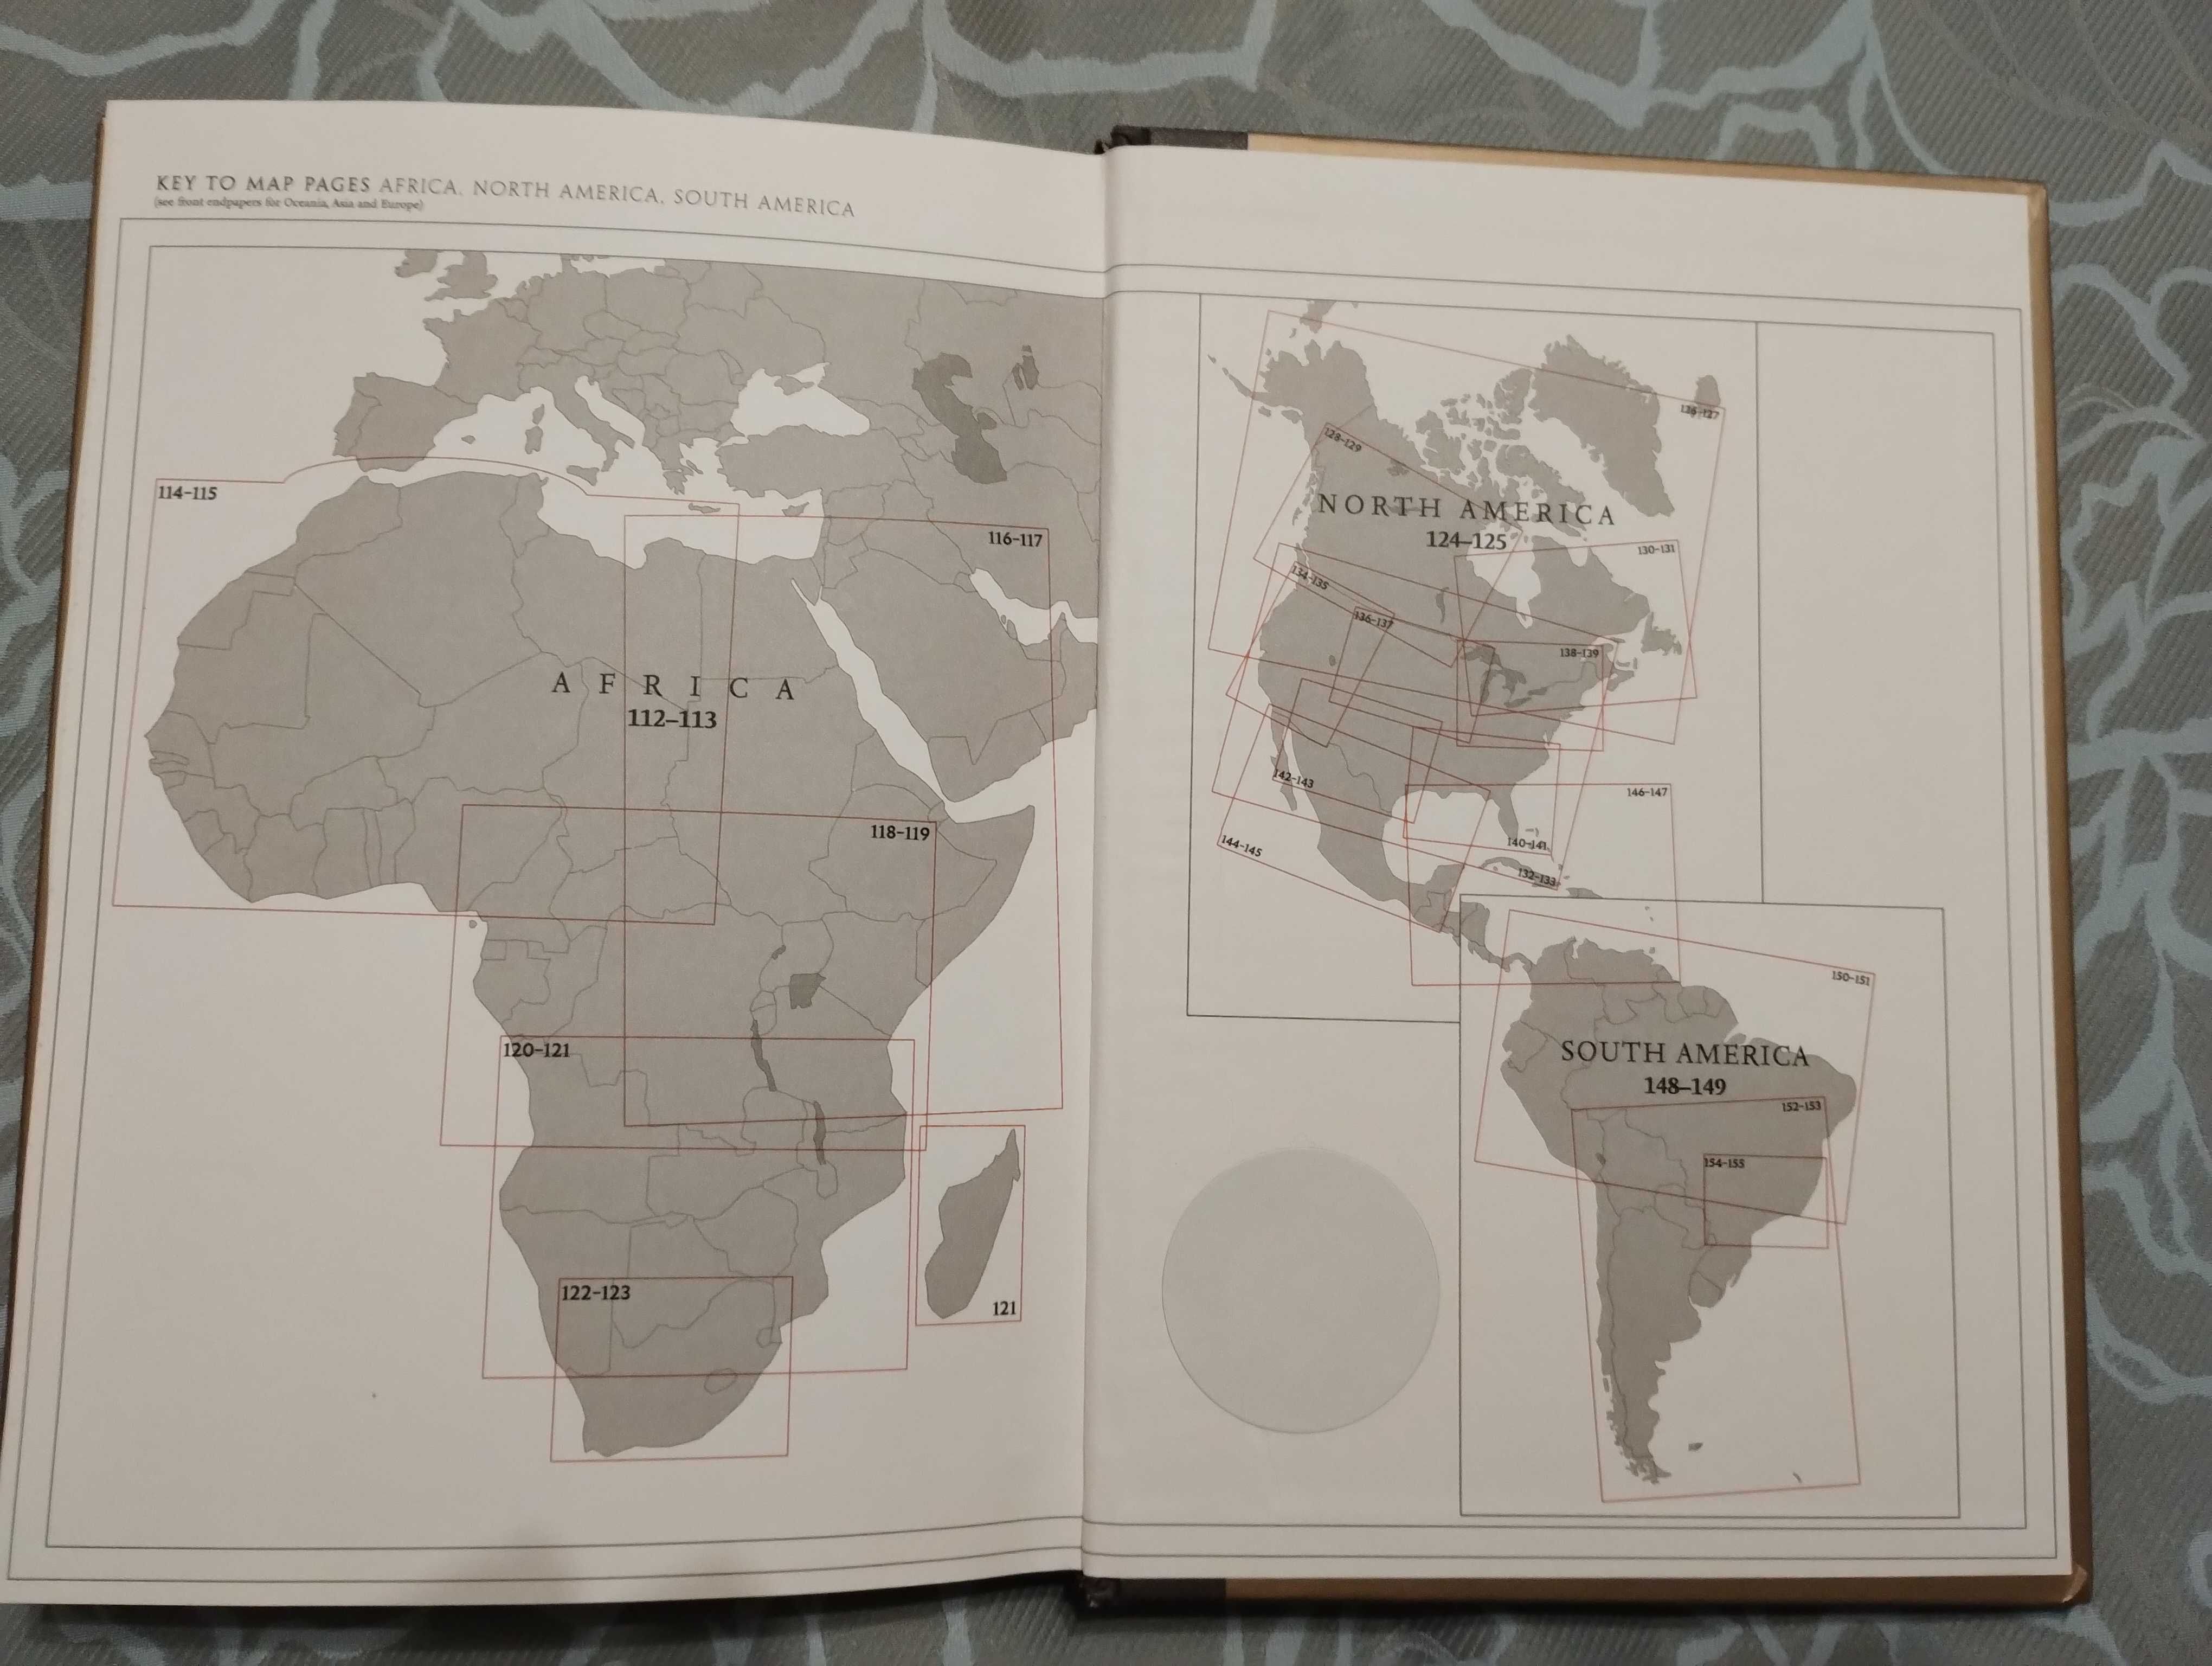 Compact atlas of the world. THE Times   издательство.2009 год.